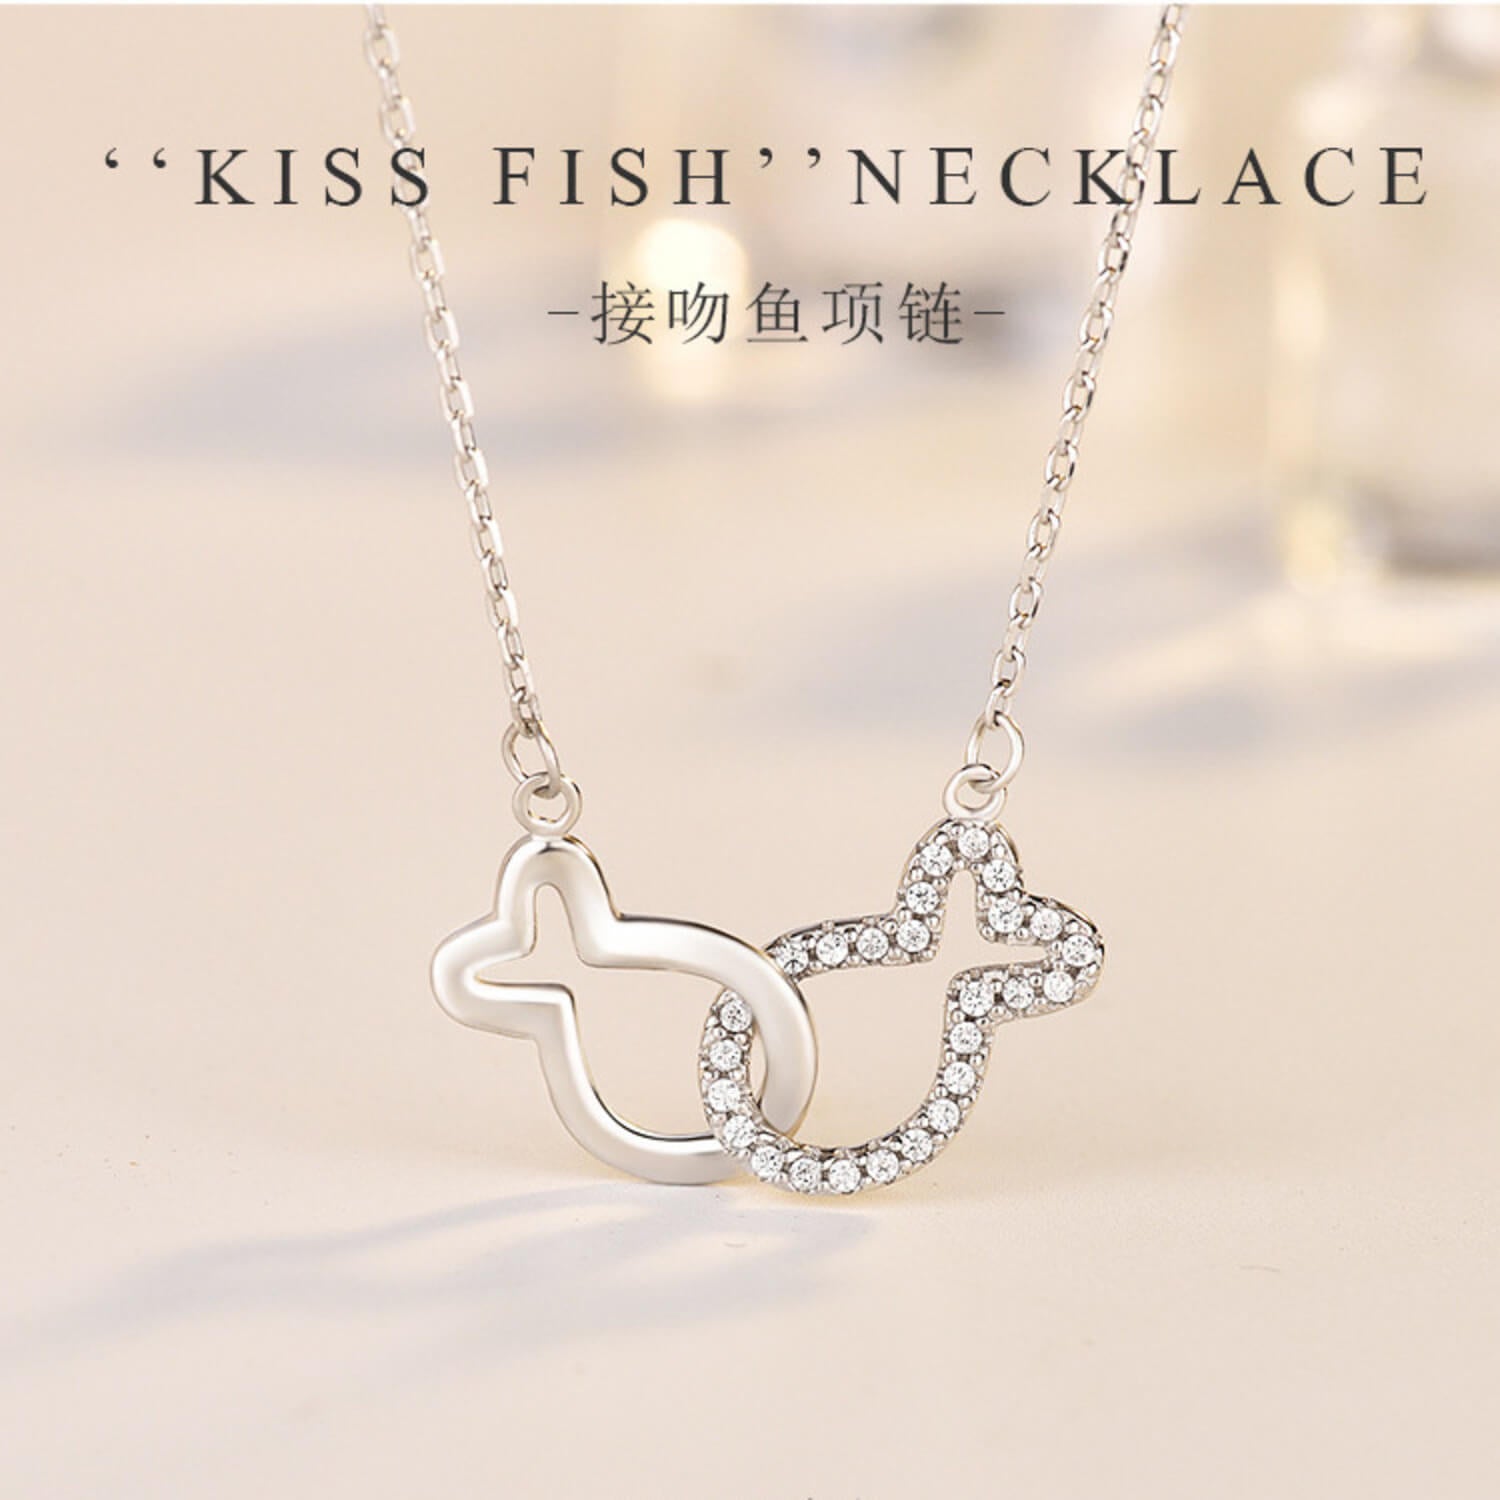 fish necklace pendant interlocking fish pendant silver price